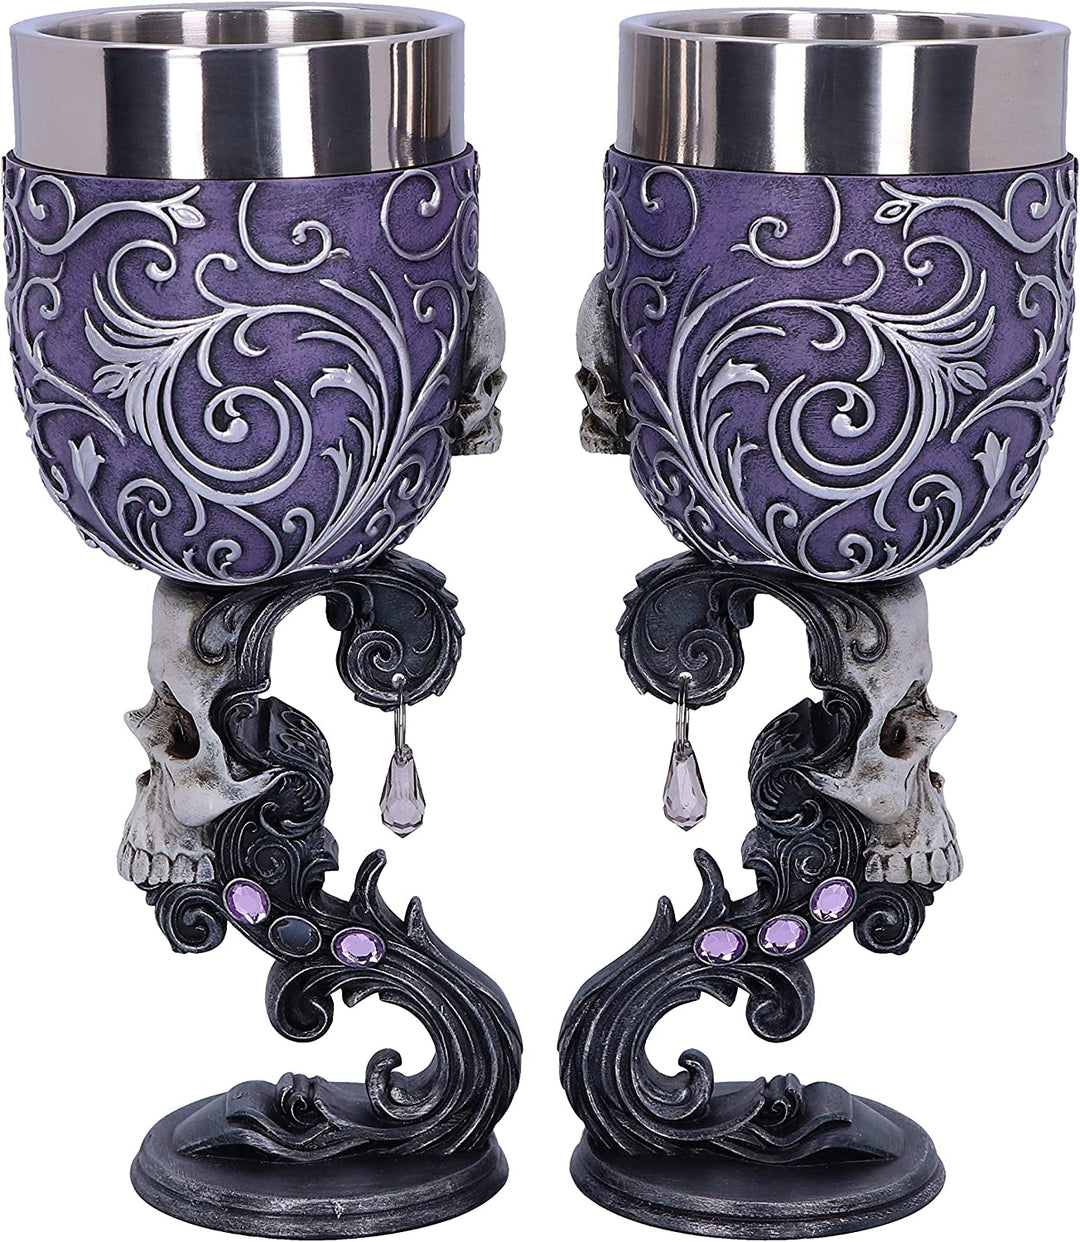 Nemesis Now B5168R0 Deaths Desire Twin Skull Heart Set of Two Goblets, Purple, 1